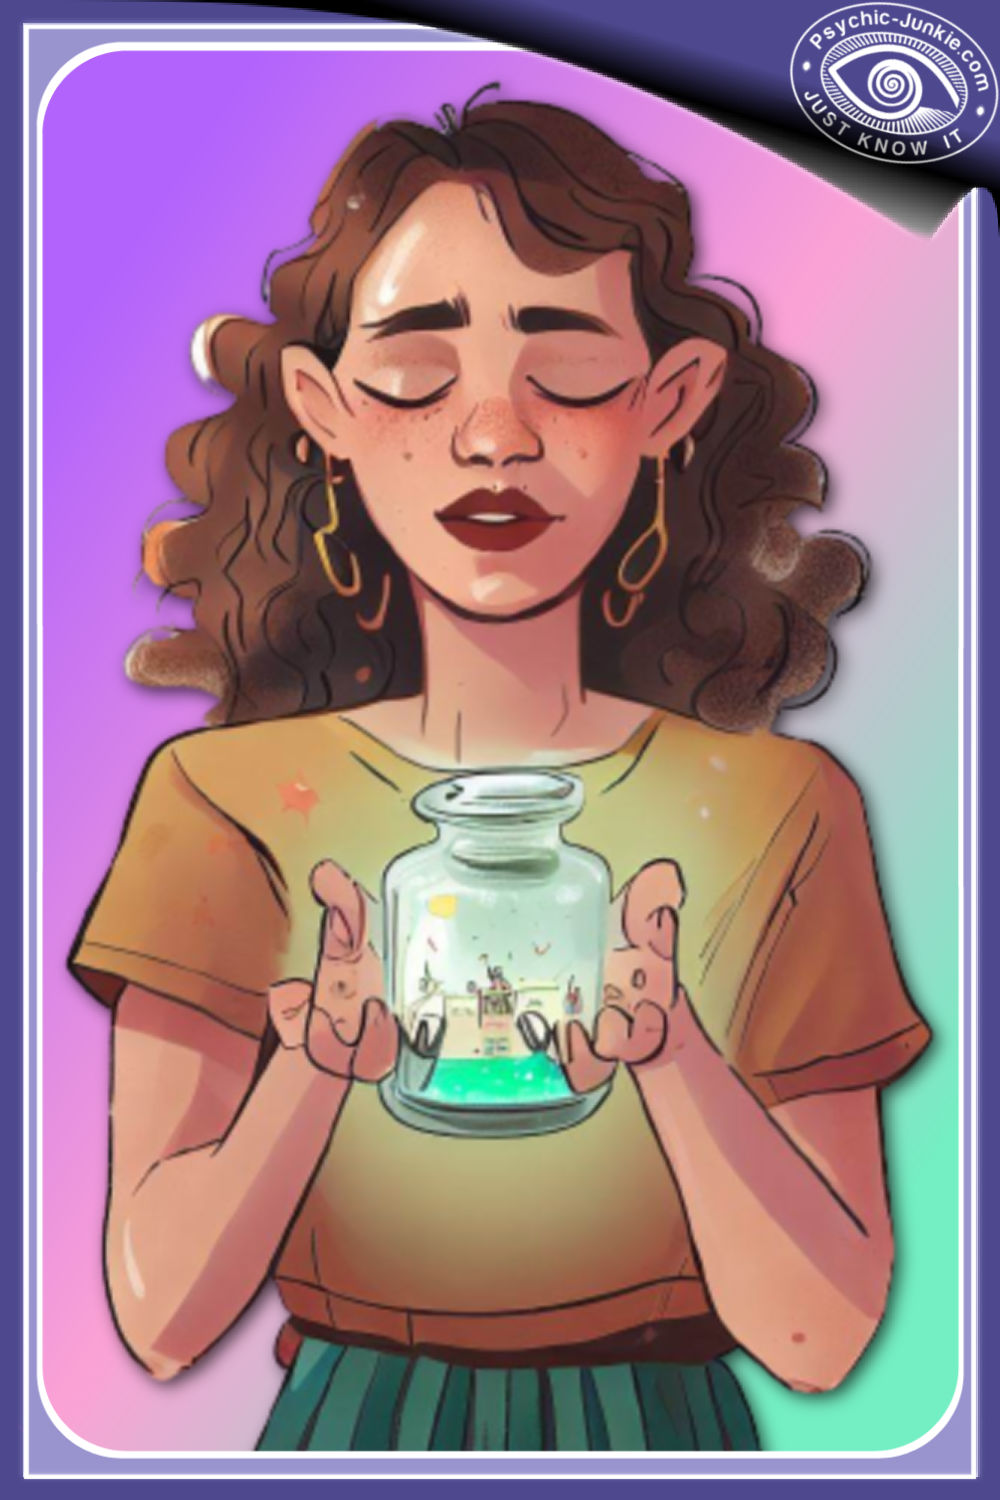 Have you tried a Manifesting Desires Jar?